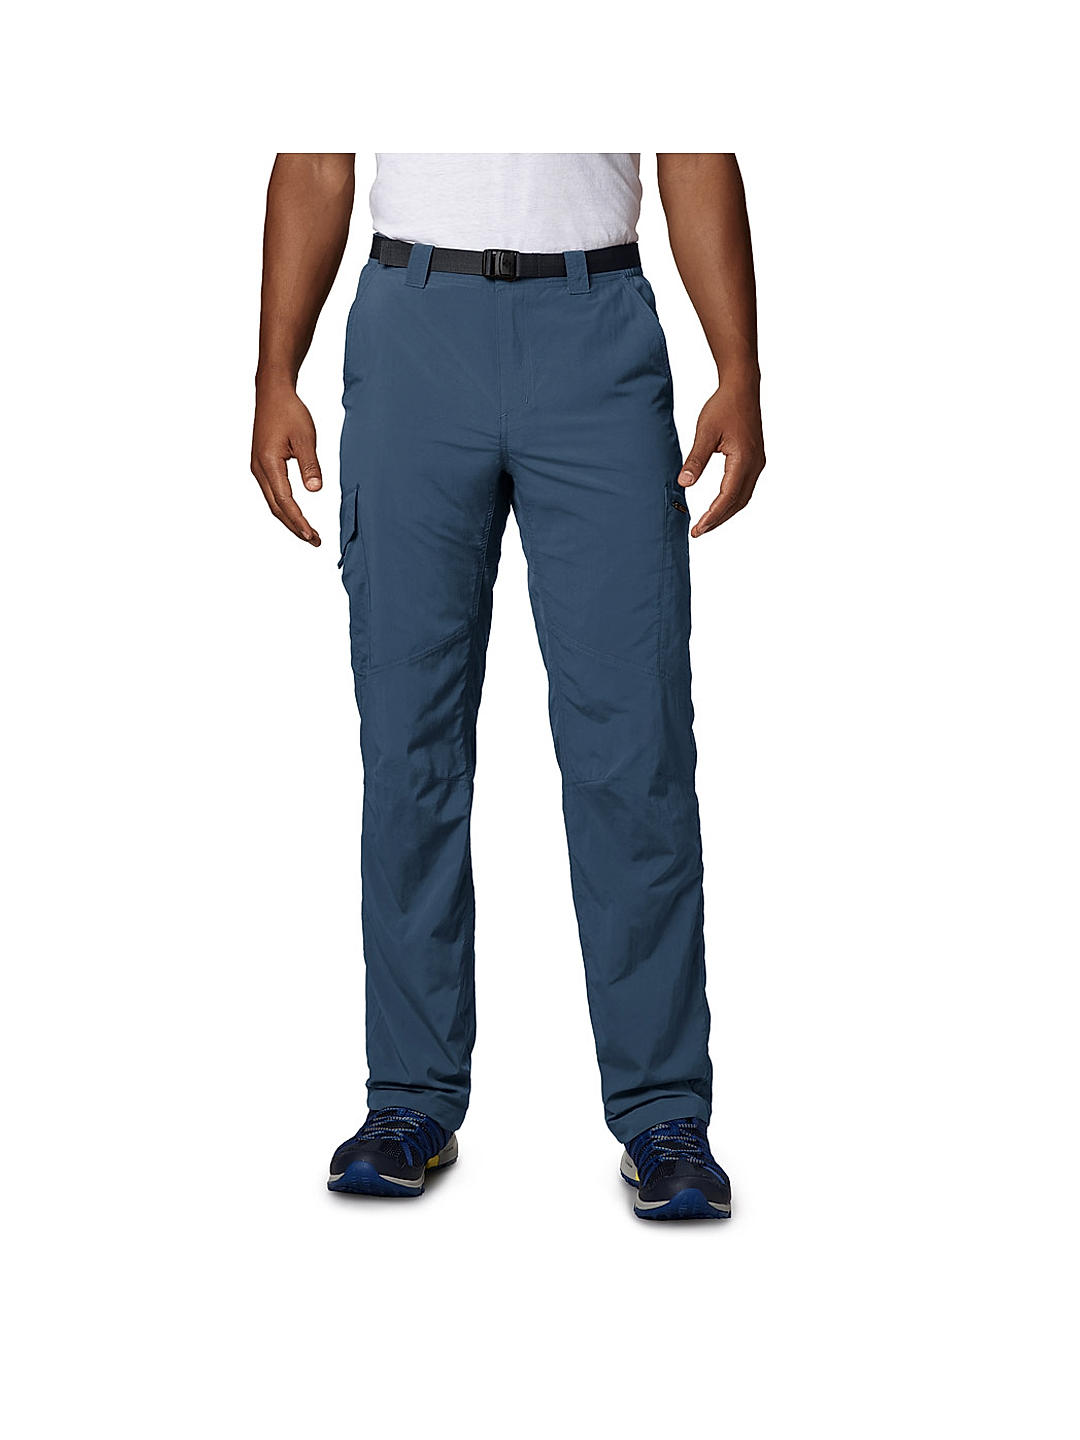 Buy Black Silver Ridge Cargo Pant for Men Online at Columbia Sportswear   480351